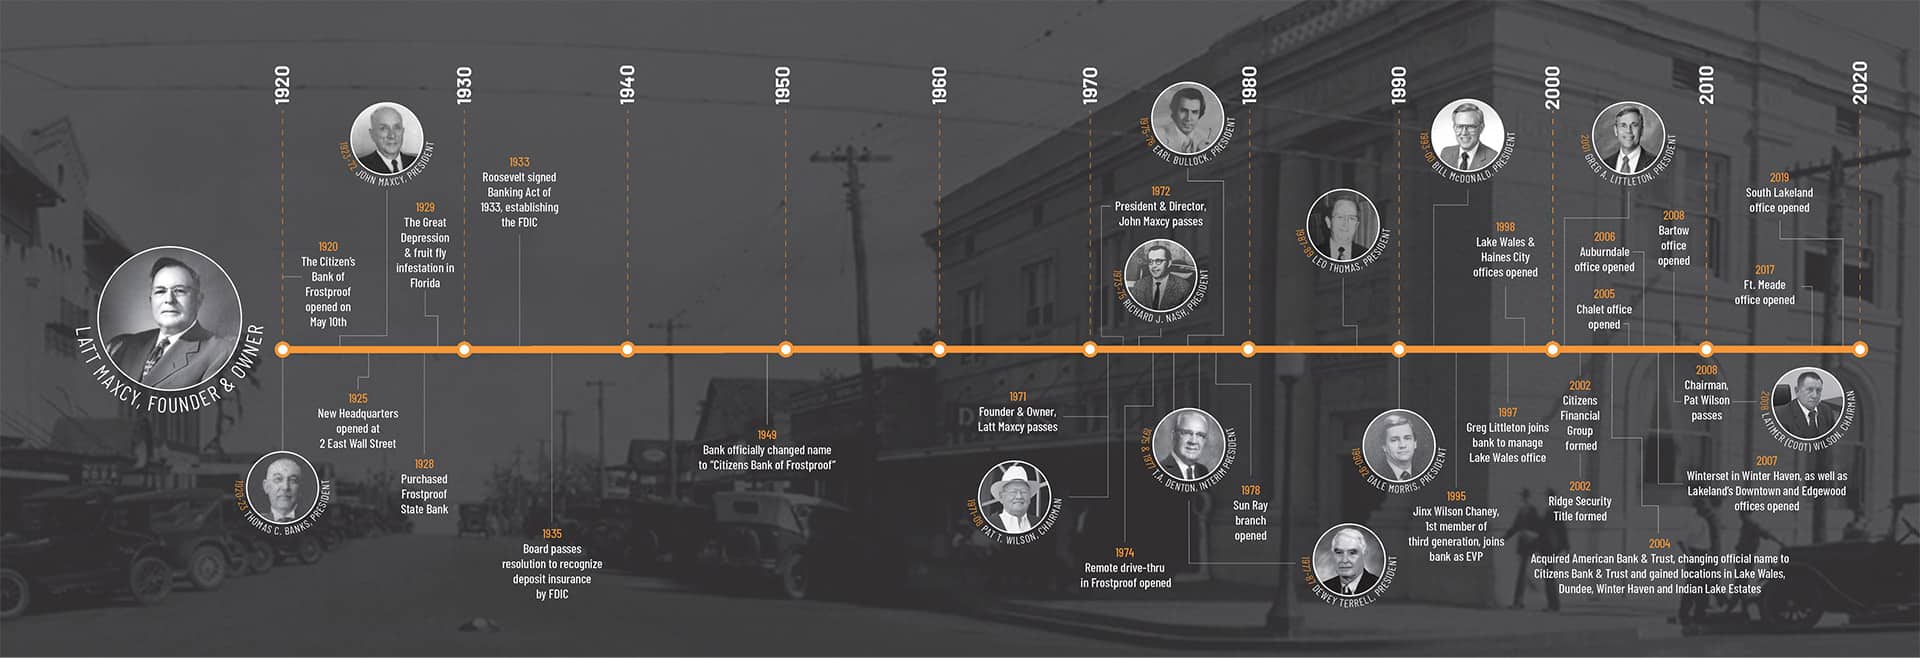 CBT 100year Timeline